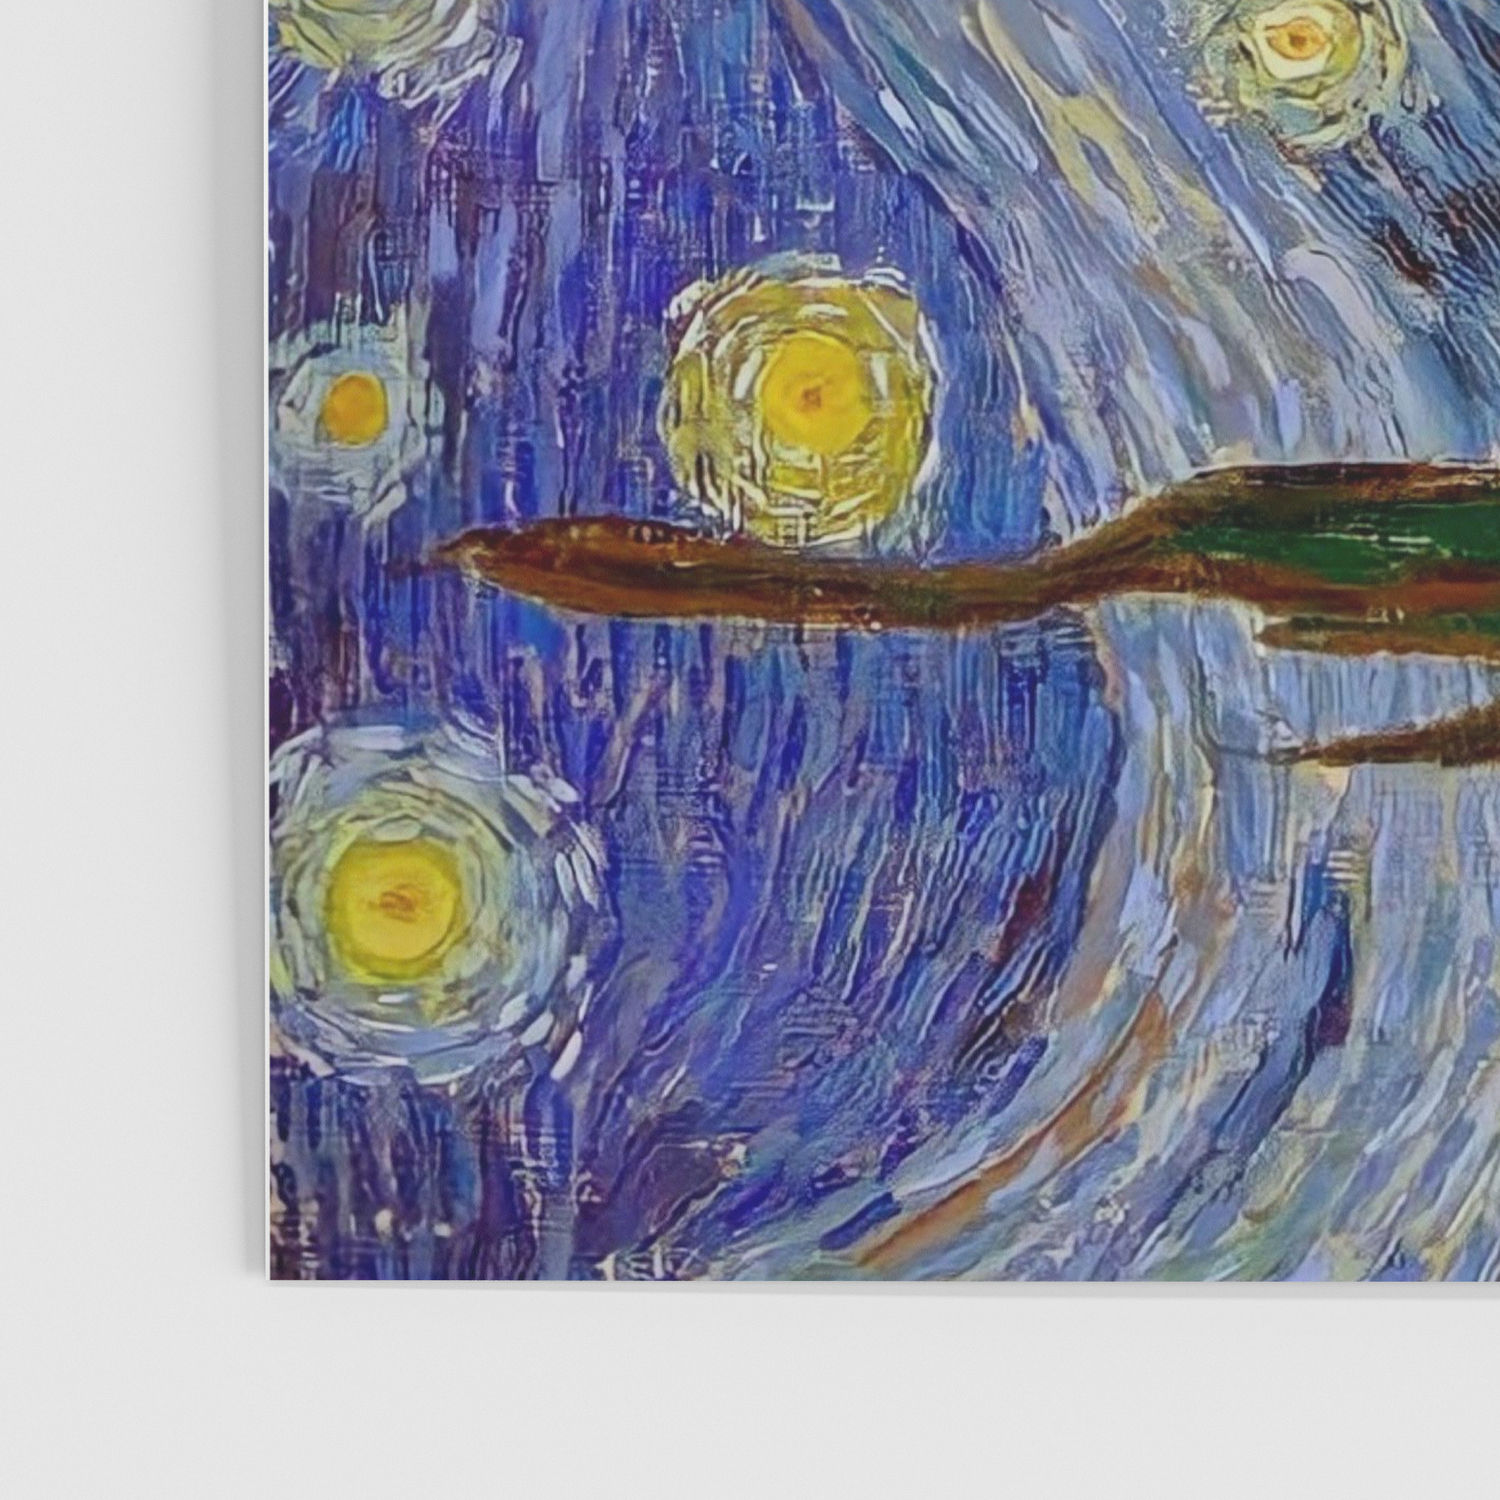 Night van Gogh Poster by Van Gogh | Society6